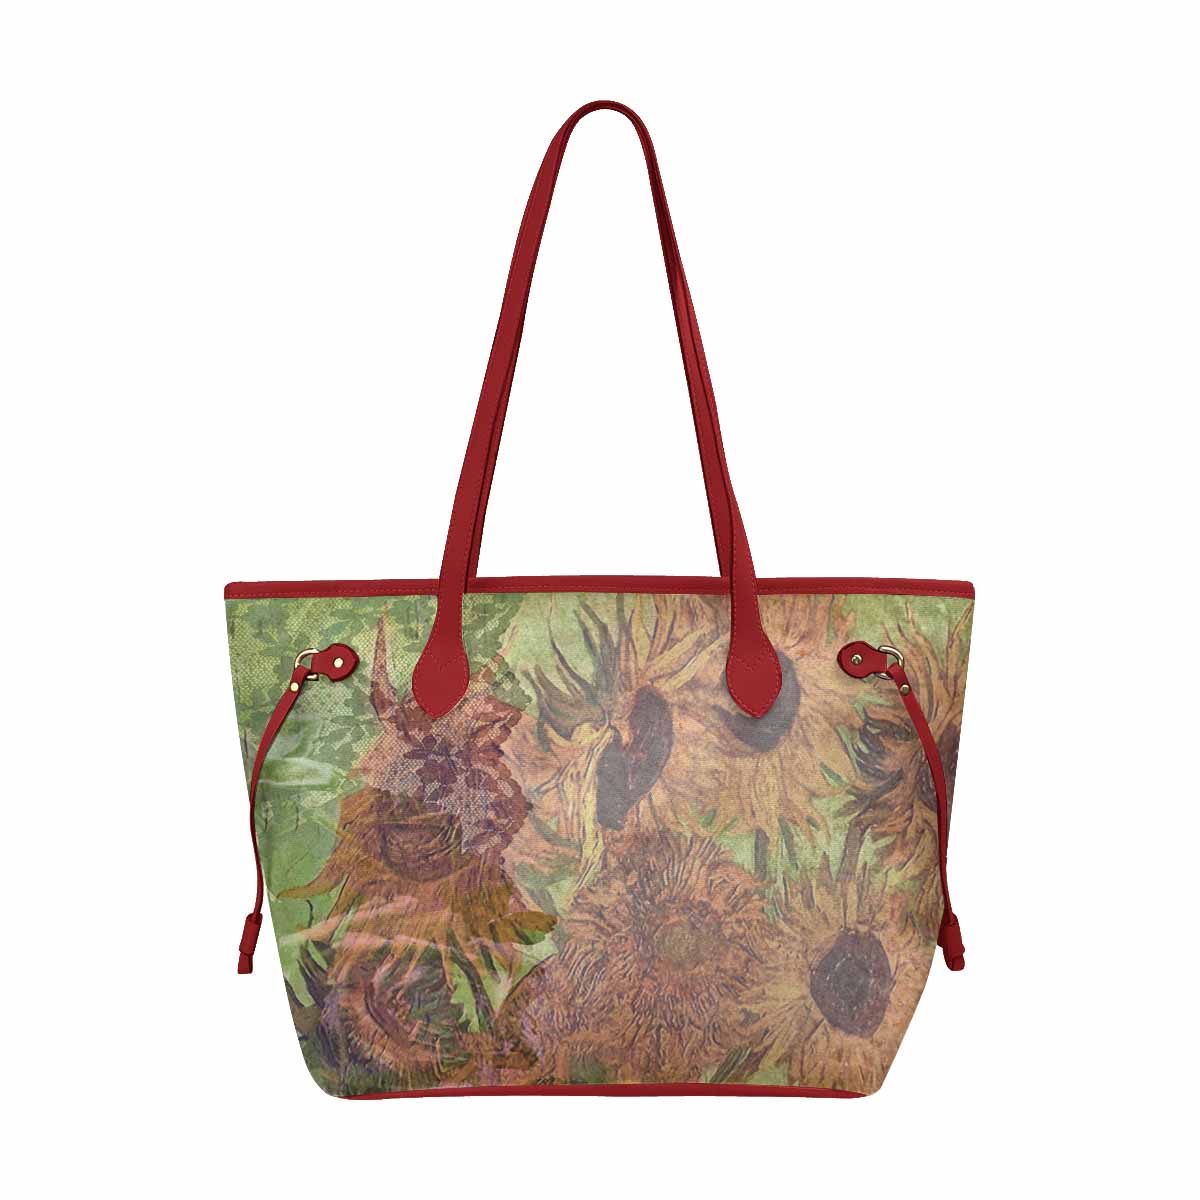 Vintage Floral Handbag, Classic Handbag, Mod 1695361, Design 48xx RED TRIM